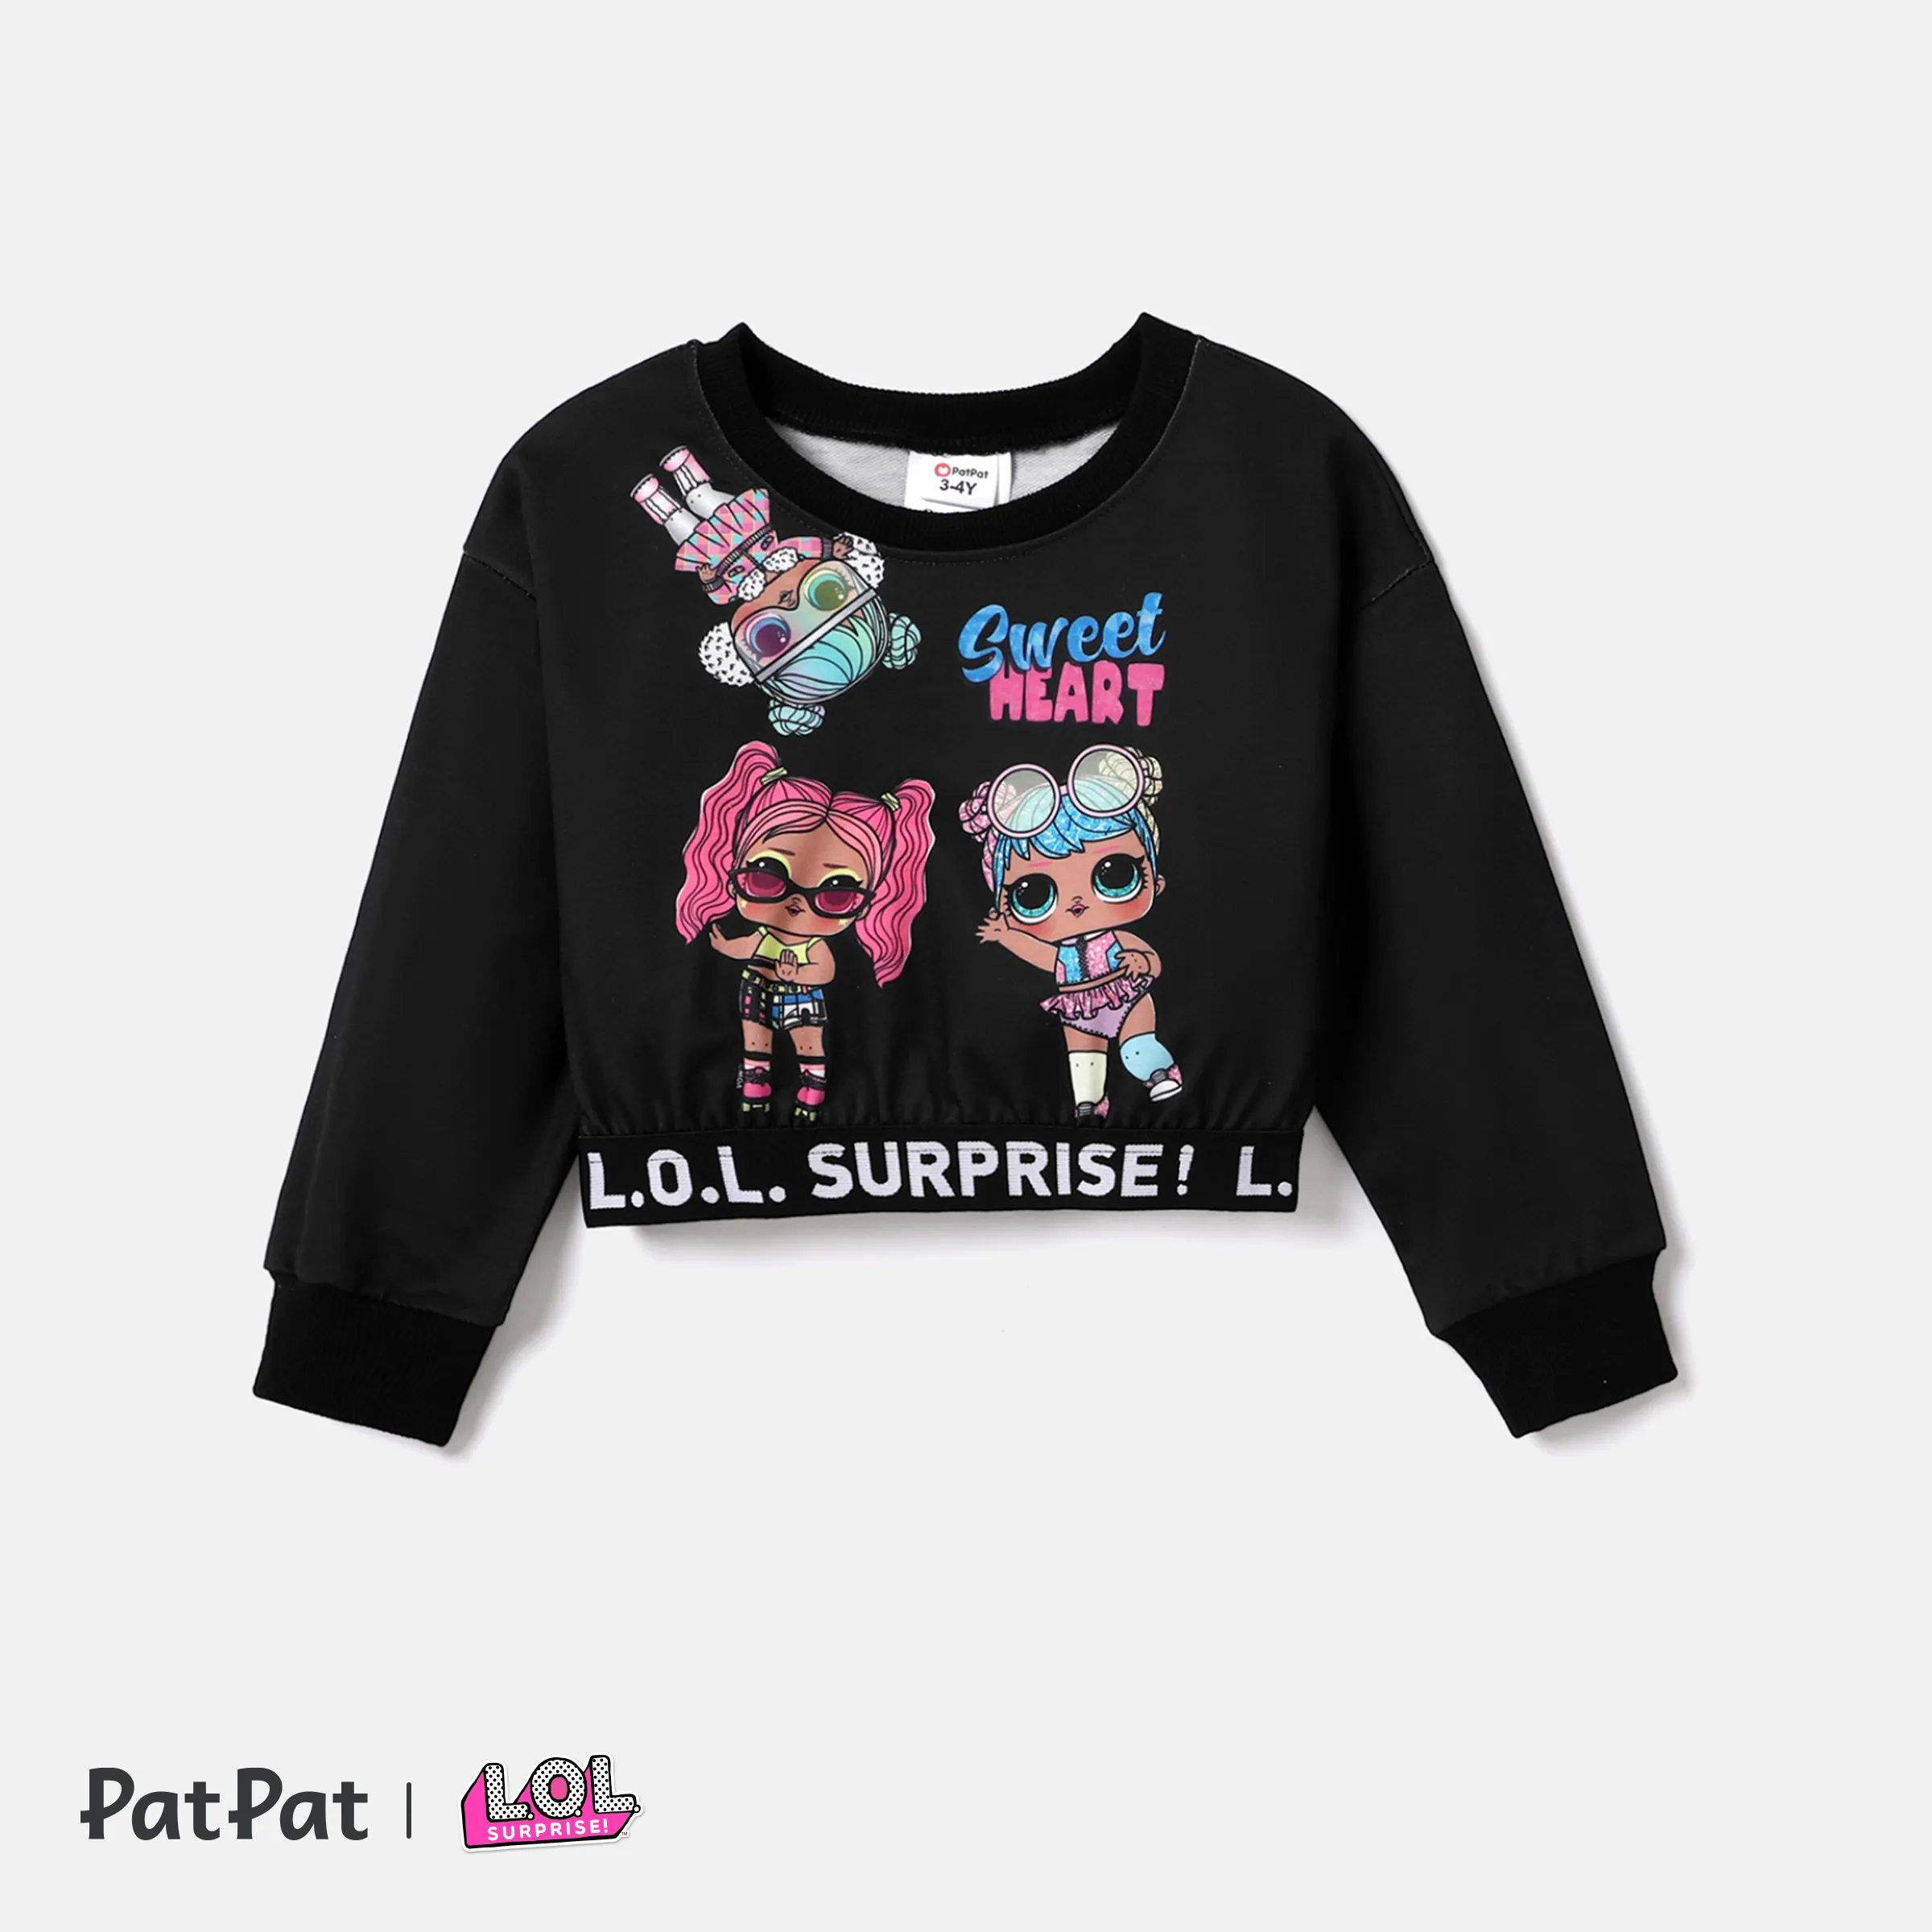 L.O.L. SURPRISE ! Toddler Girl Graphic Print Top Manches Longues Et Pantalon Tie-dye